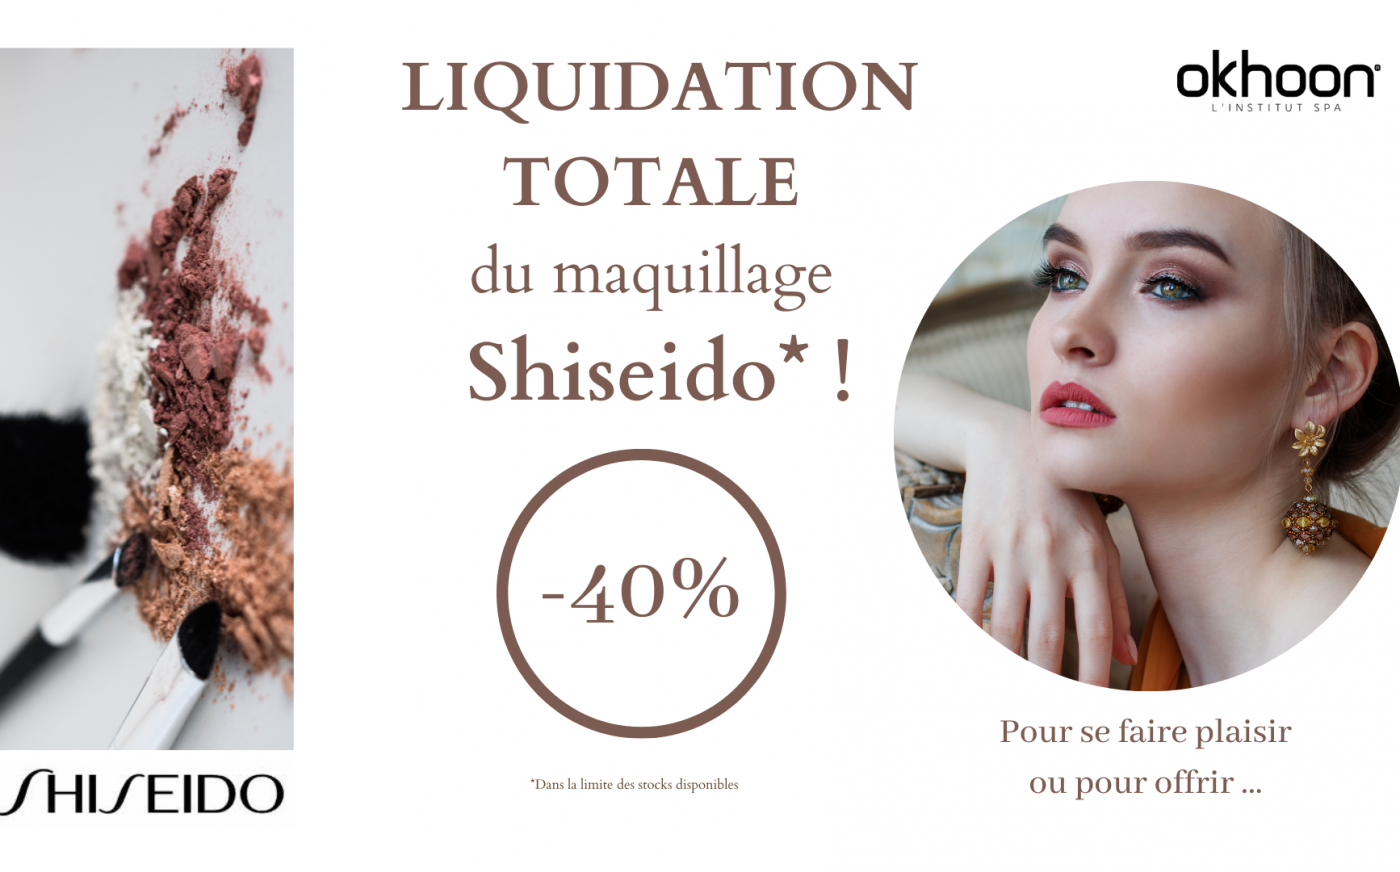 shiseido liquidation maquillage okhoon langueux